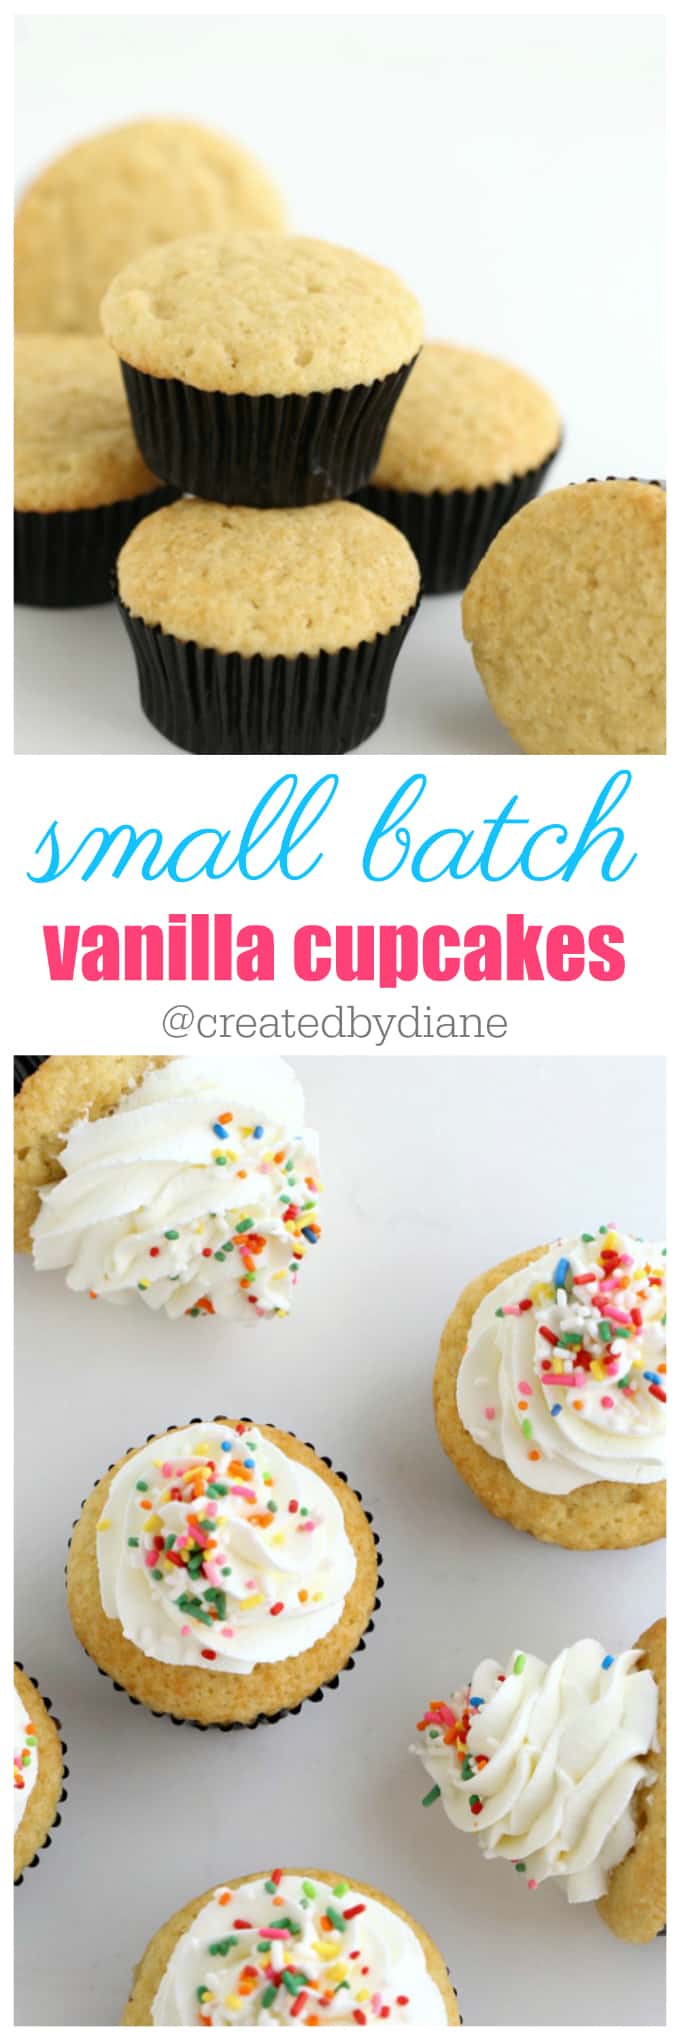 small batch vanilla cupcake recipe from @createdbydiane